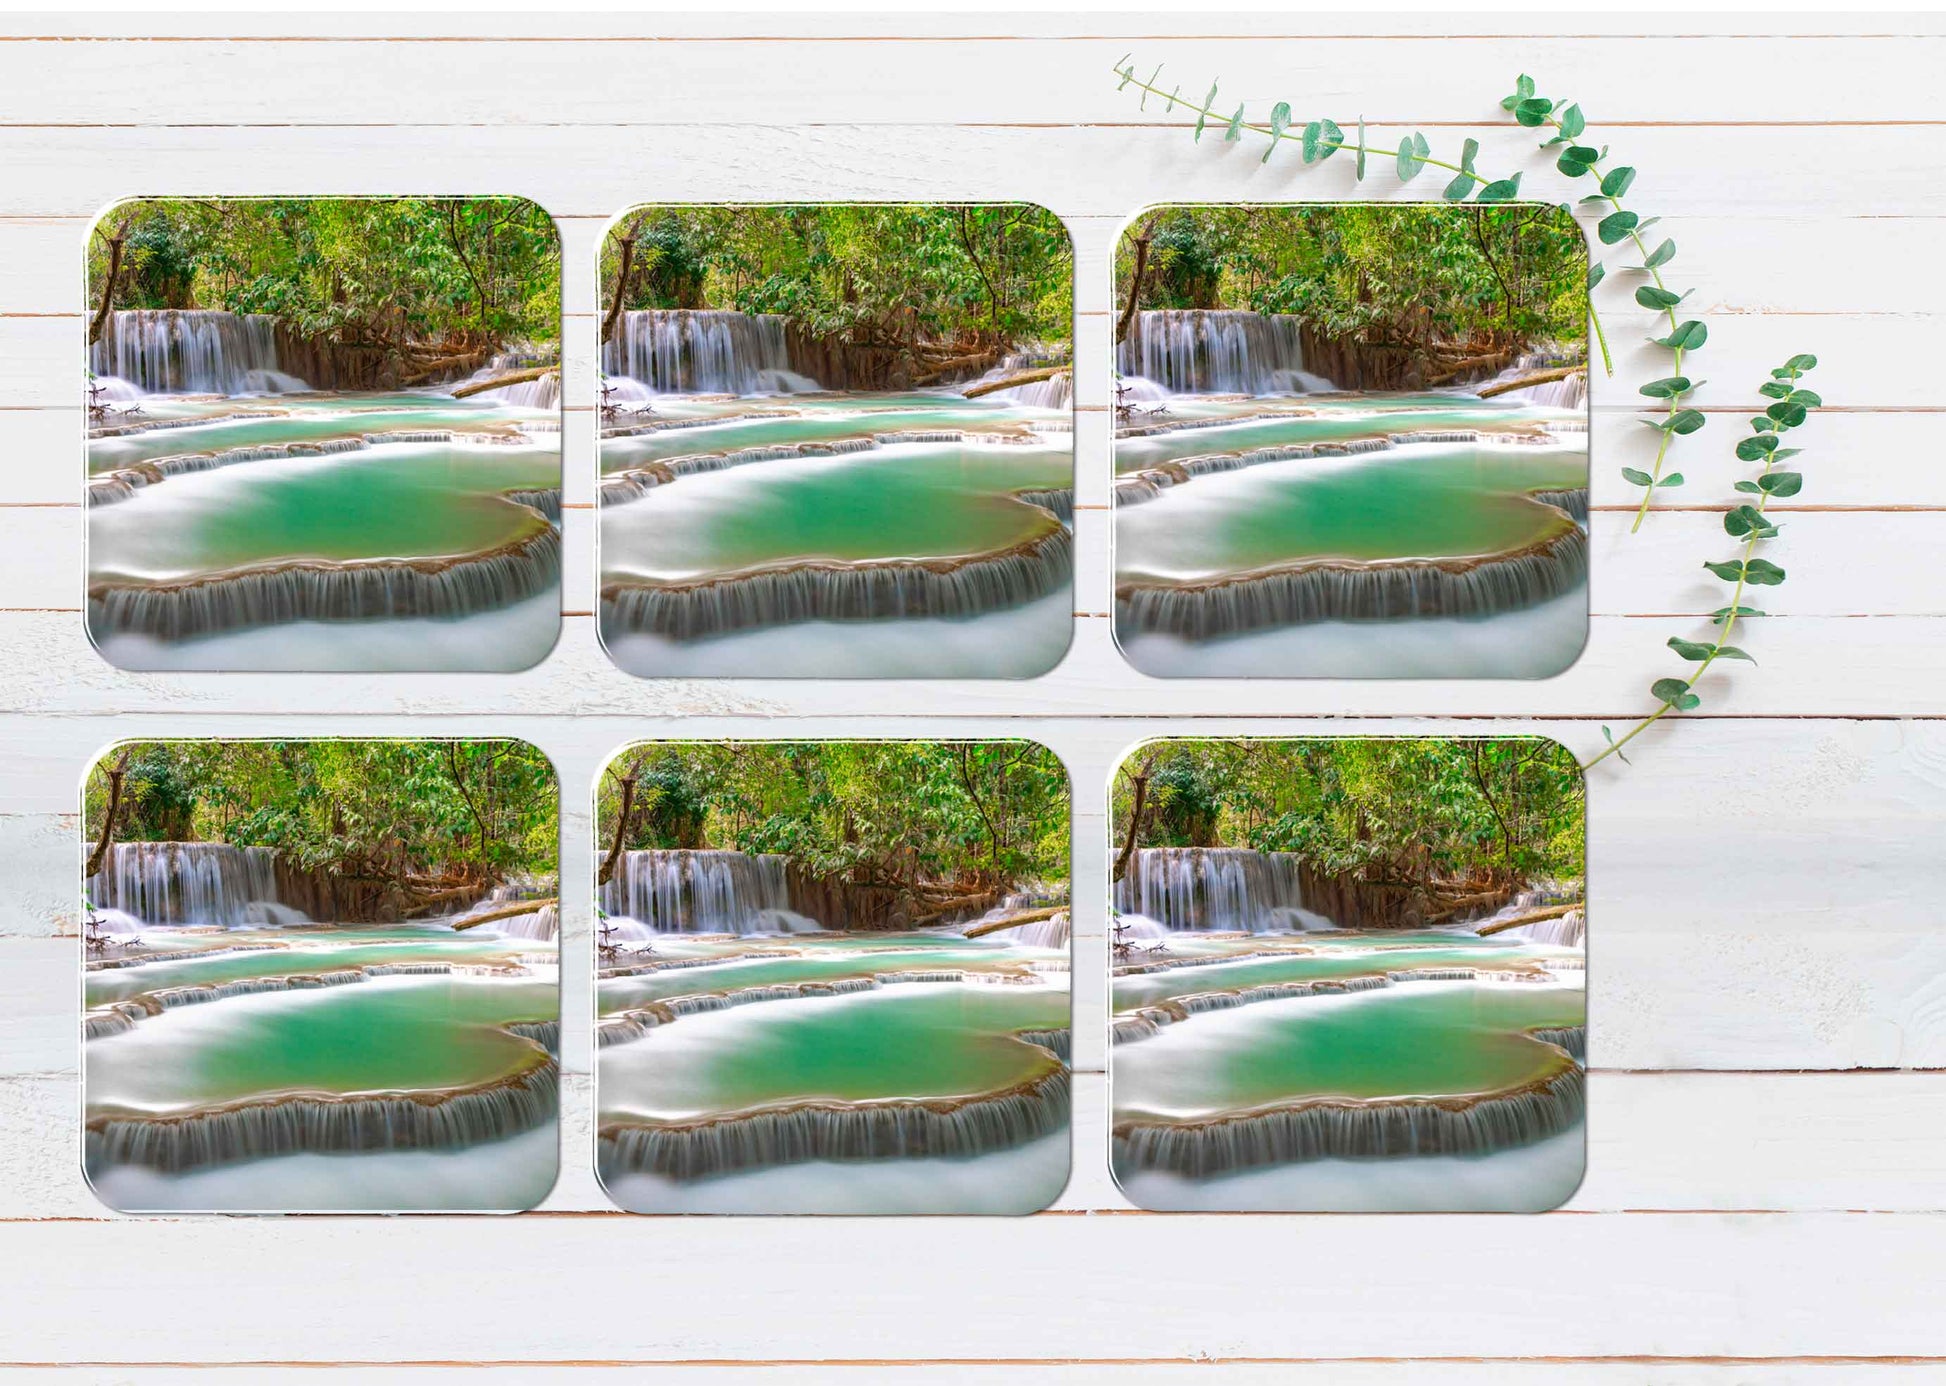 The Tat Kuang Si Waterfalls Coasters Wood & Rubber - Set of 6 Coasters